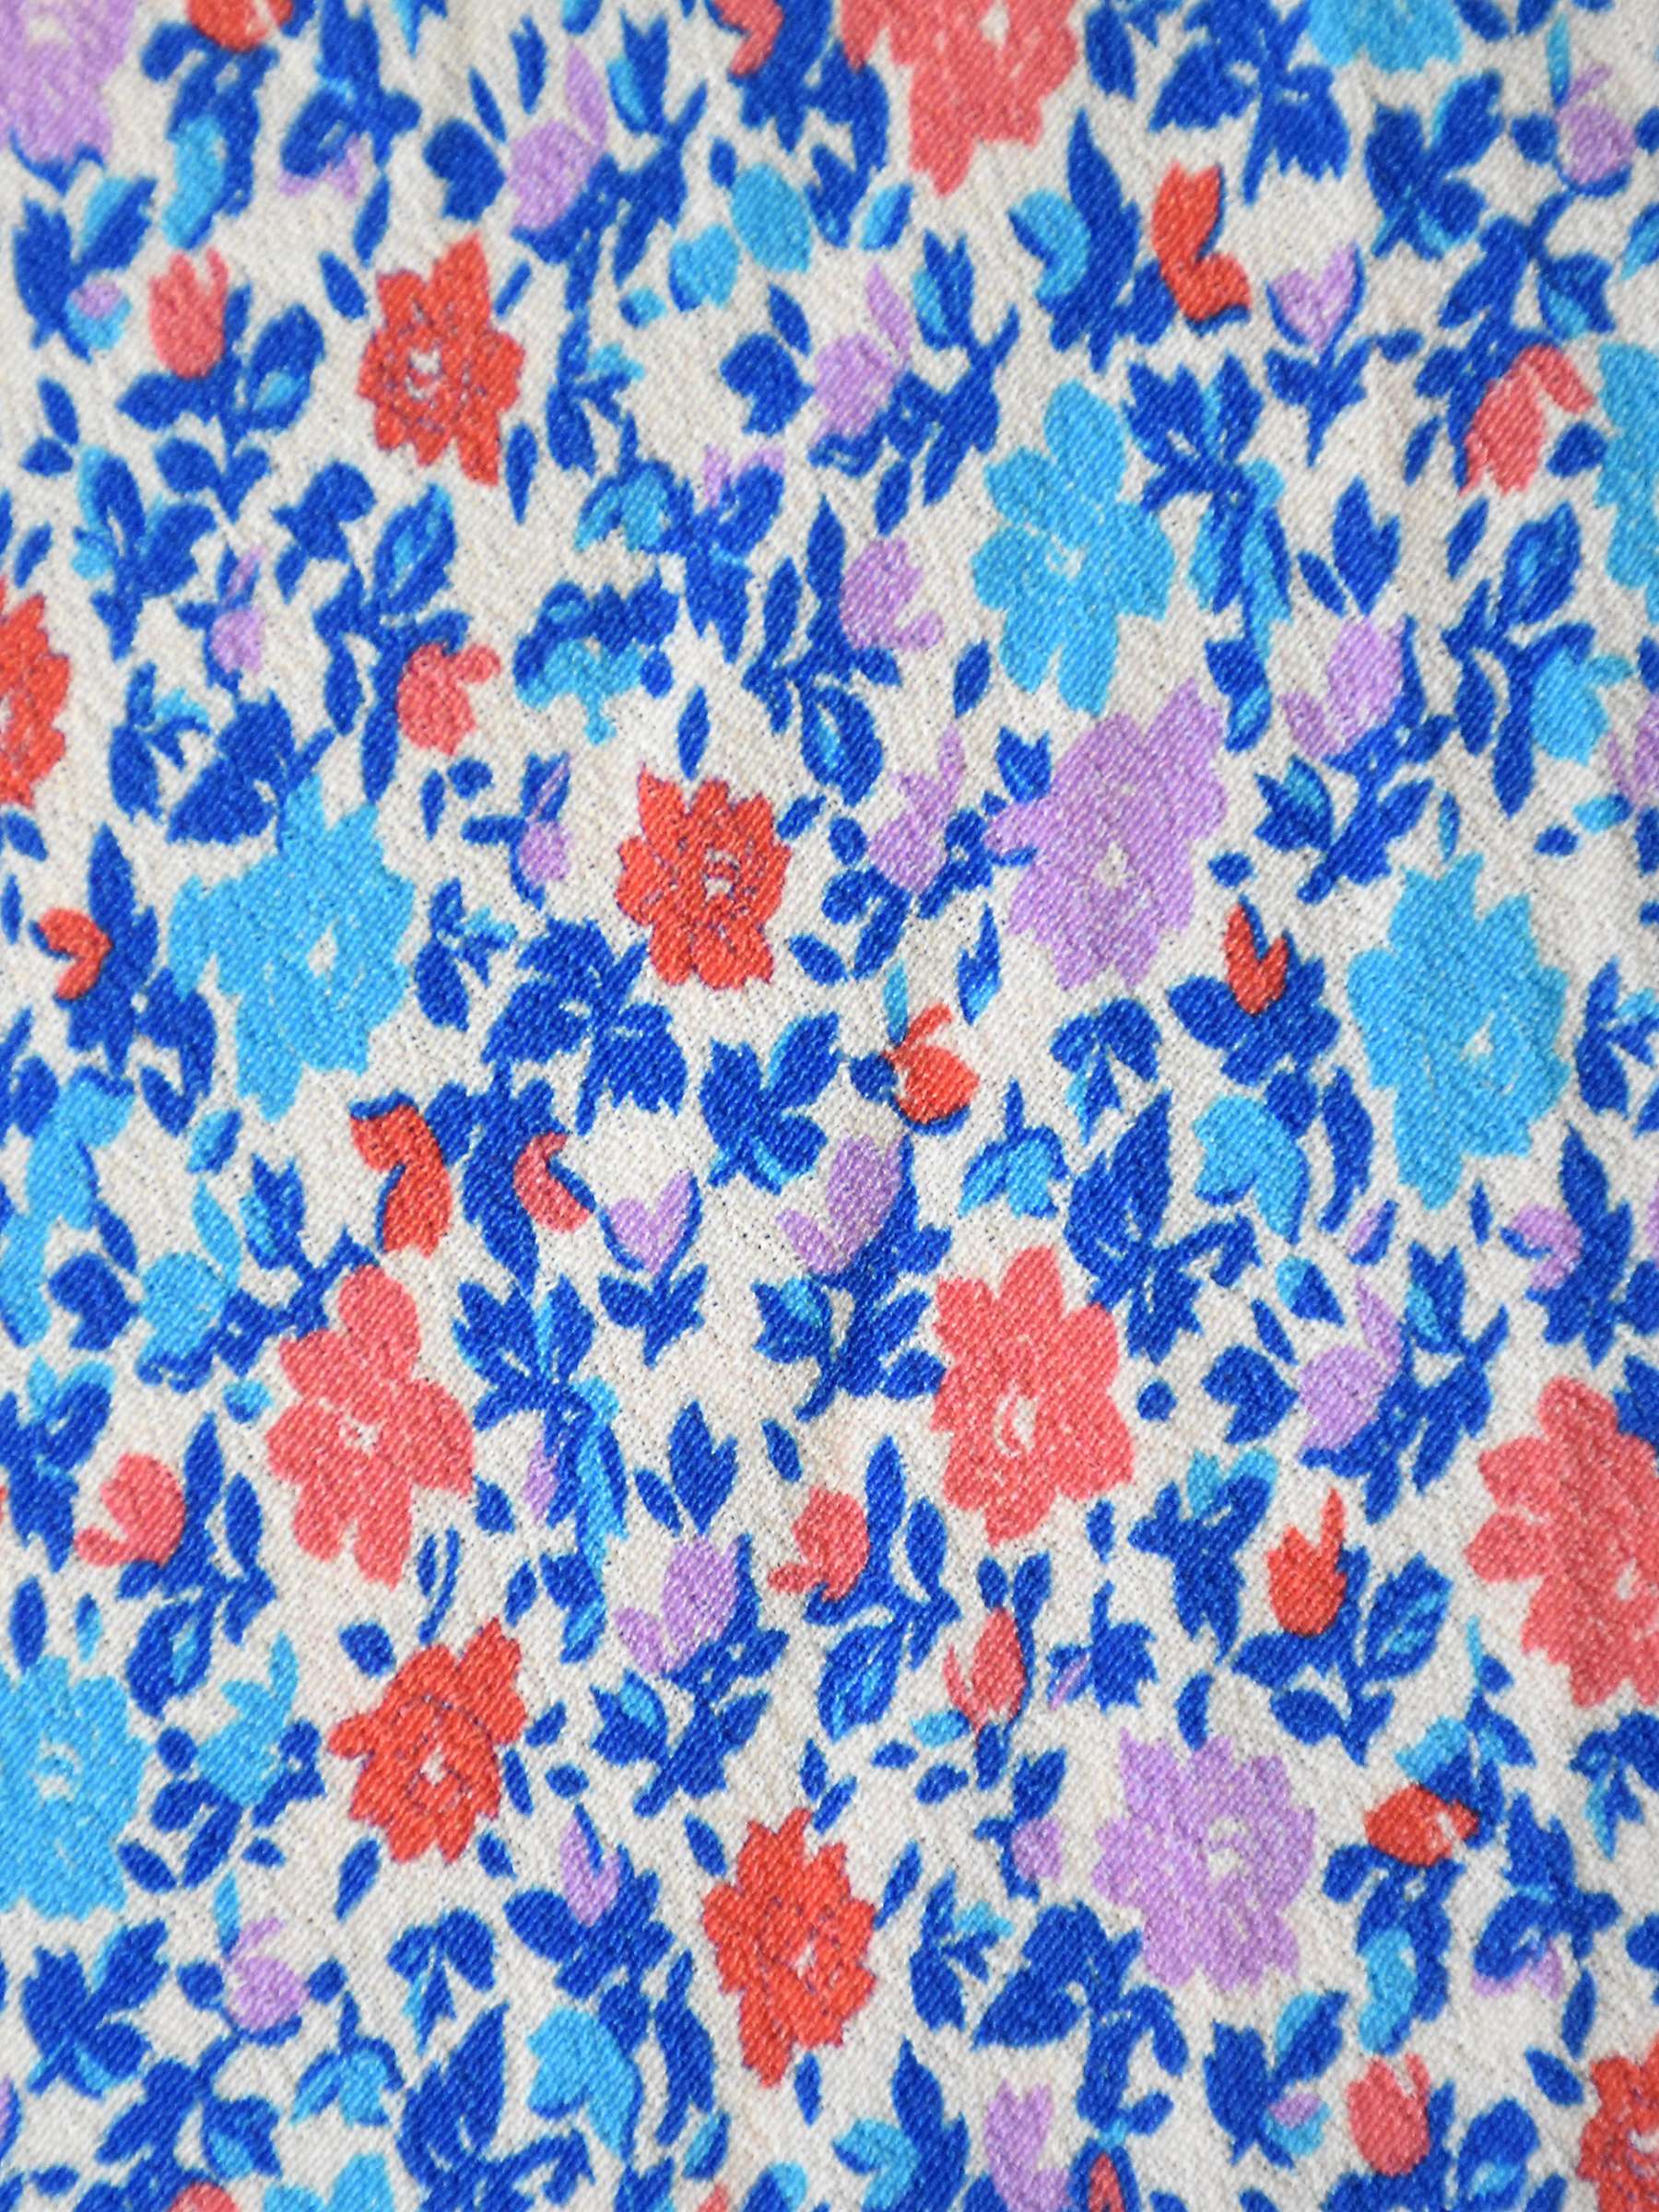 Buy Ro&Zo Petite Ditsy Floral Print Shirred Cuff Midi Dress, Blue/Multi Online at johnlewis.com